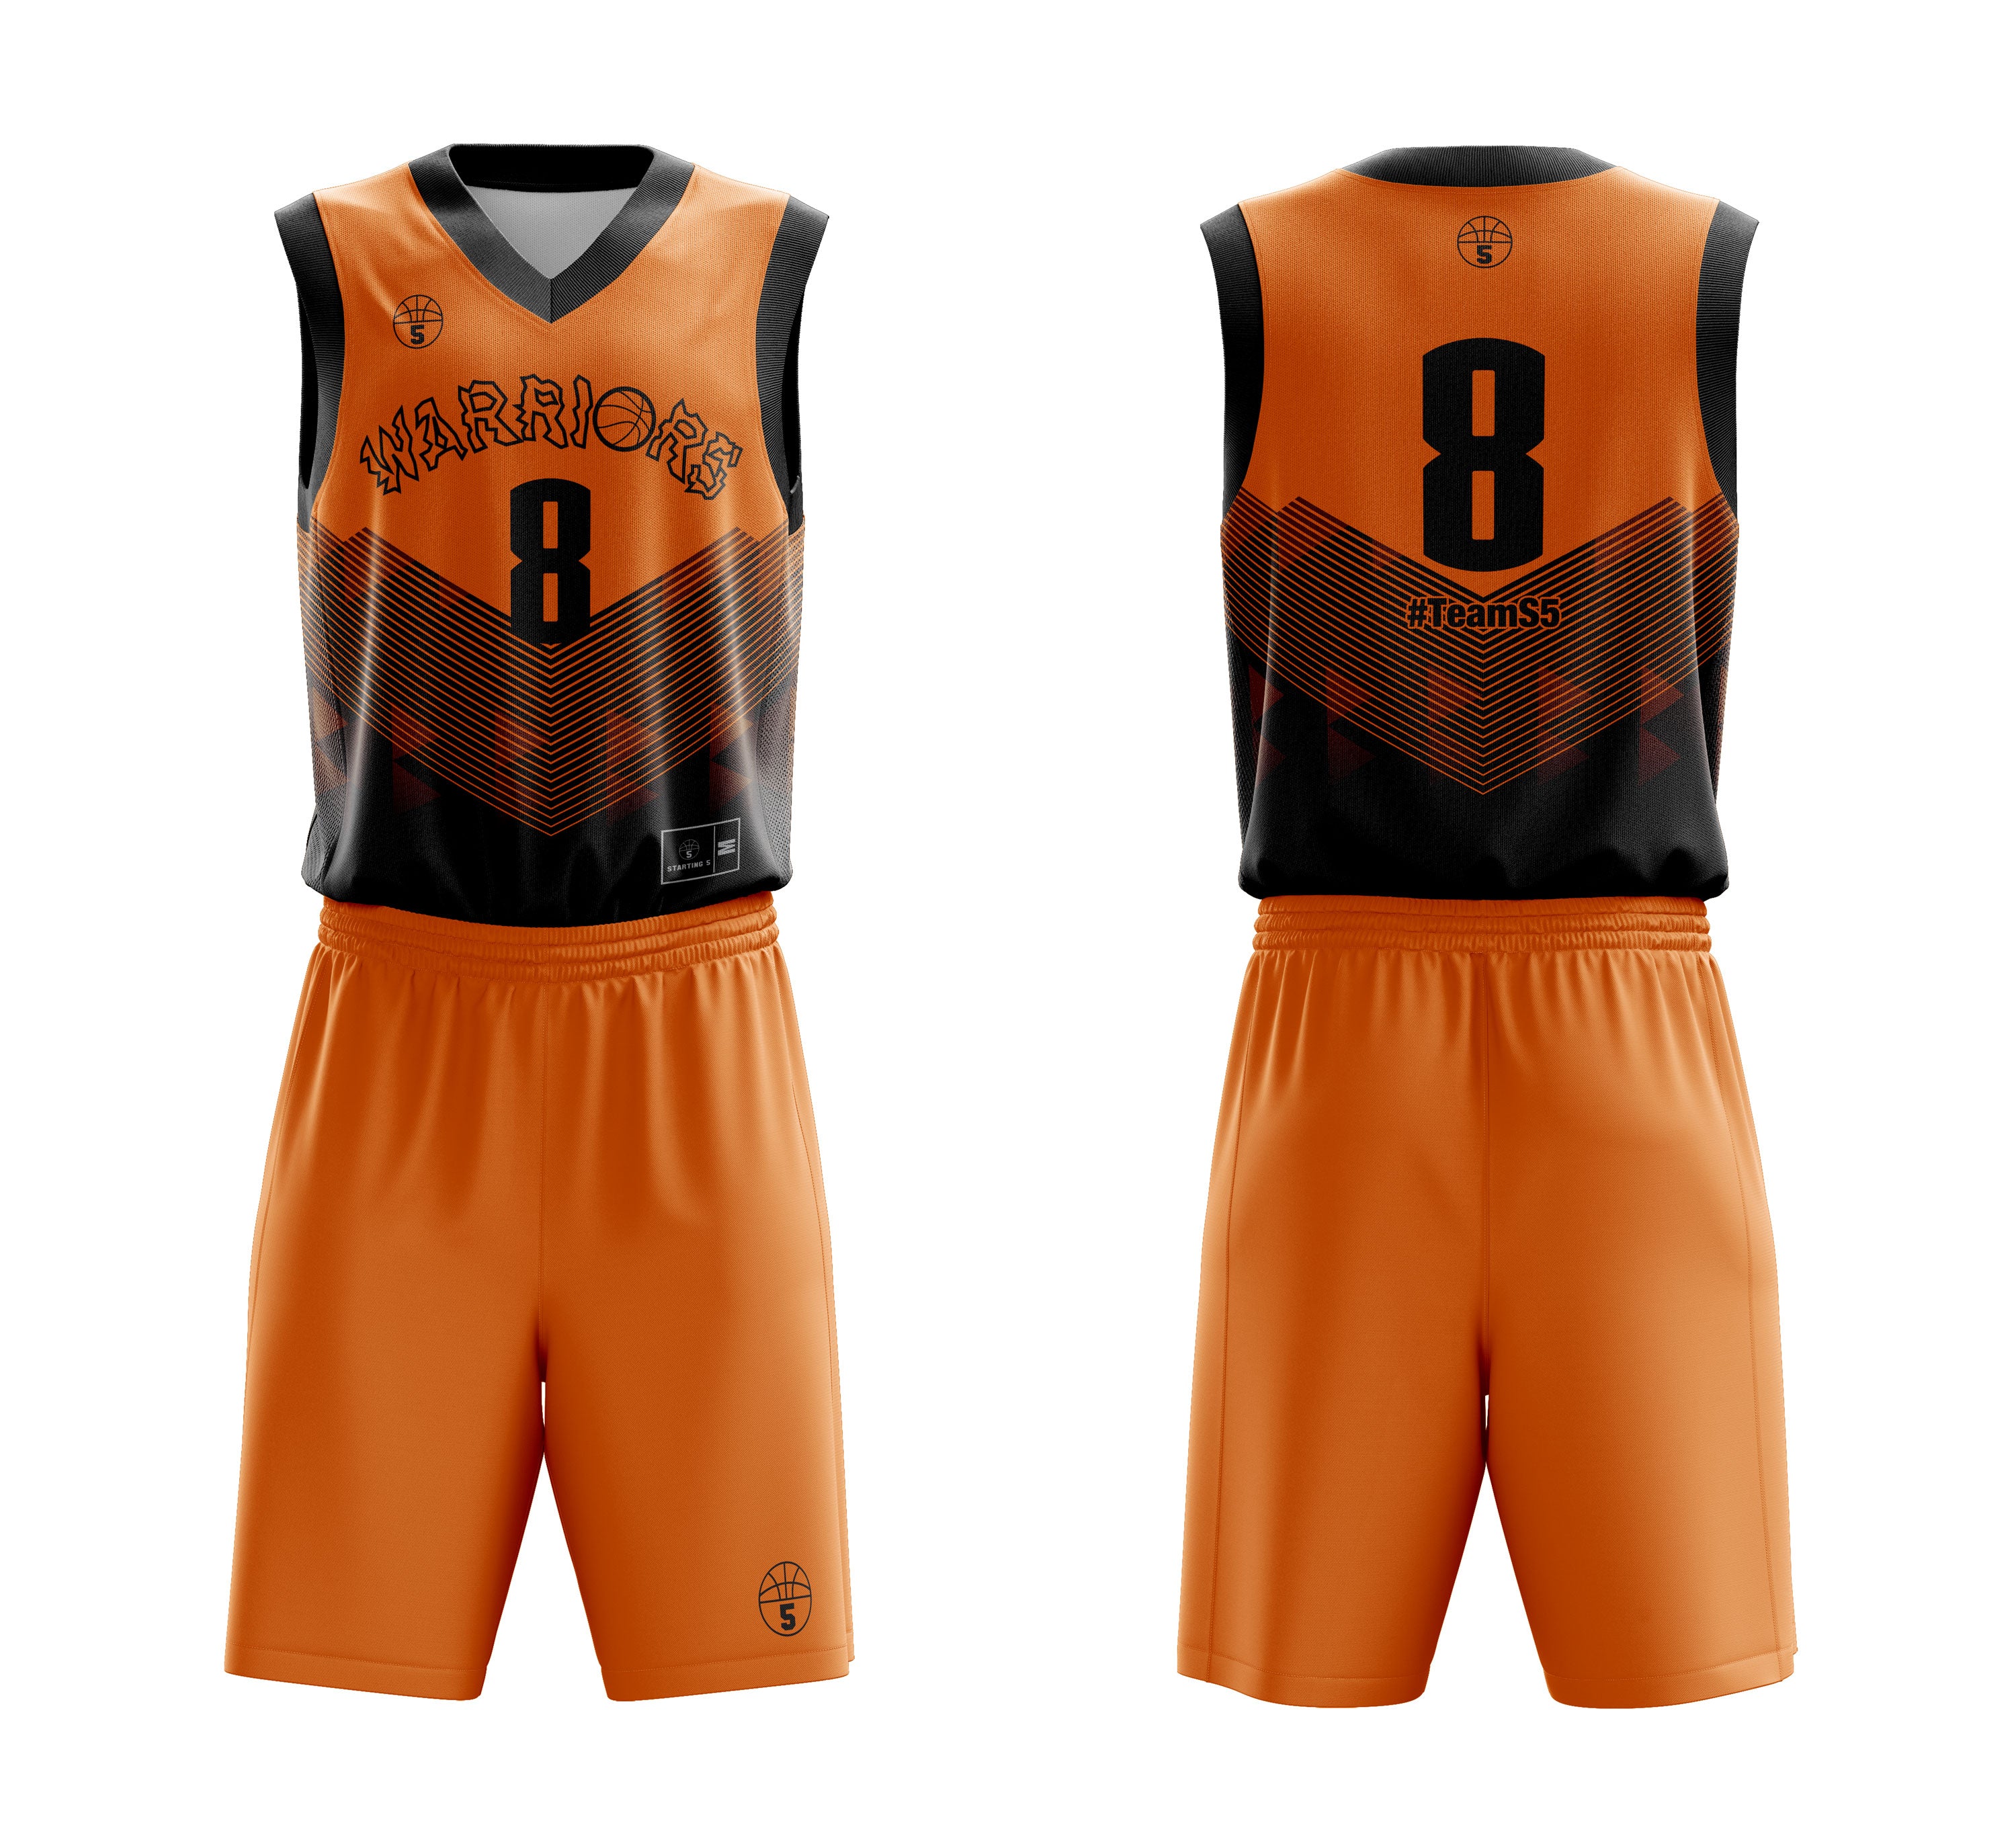 sublimation orange jersey design